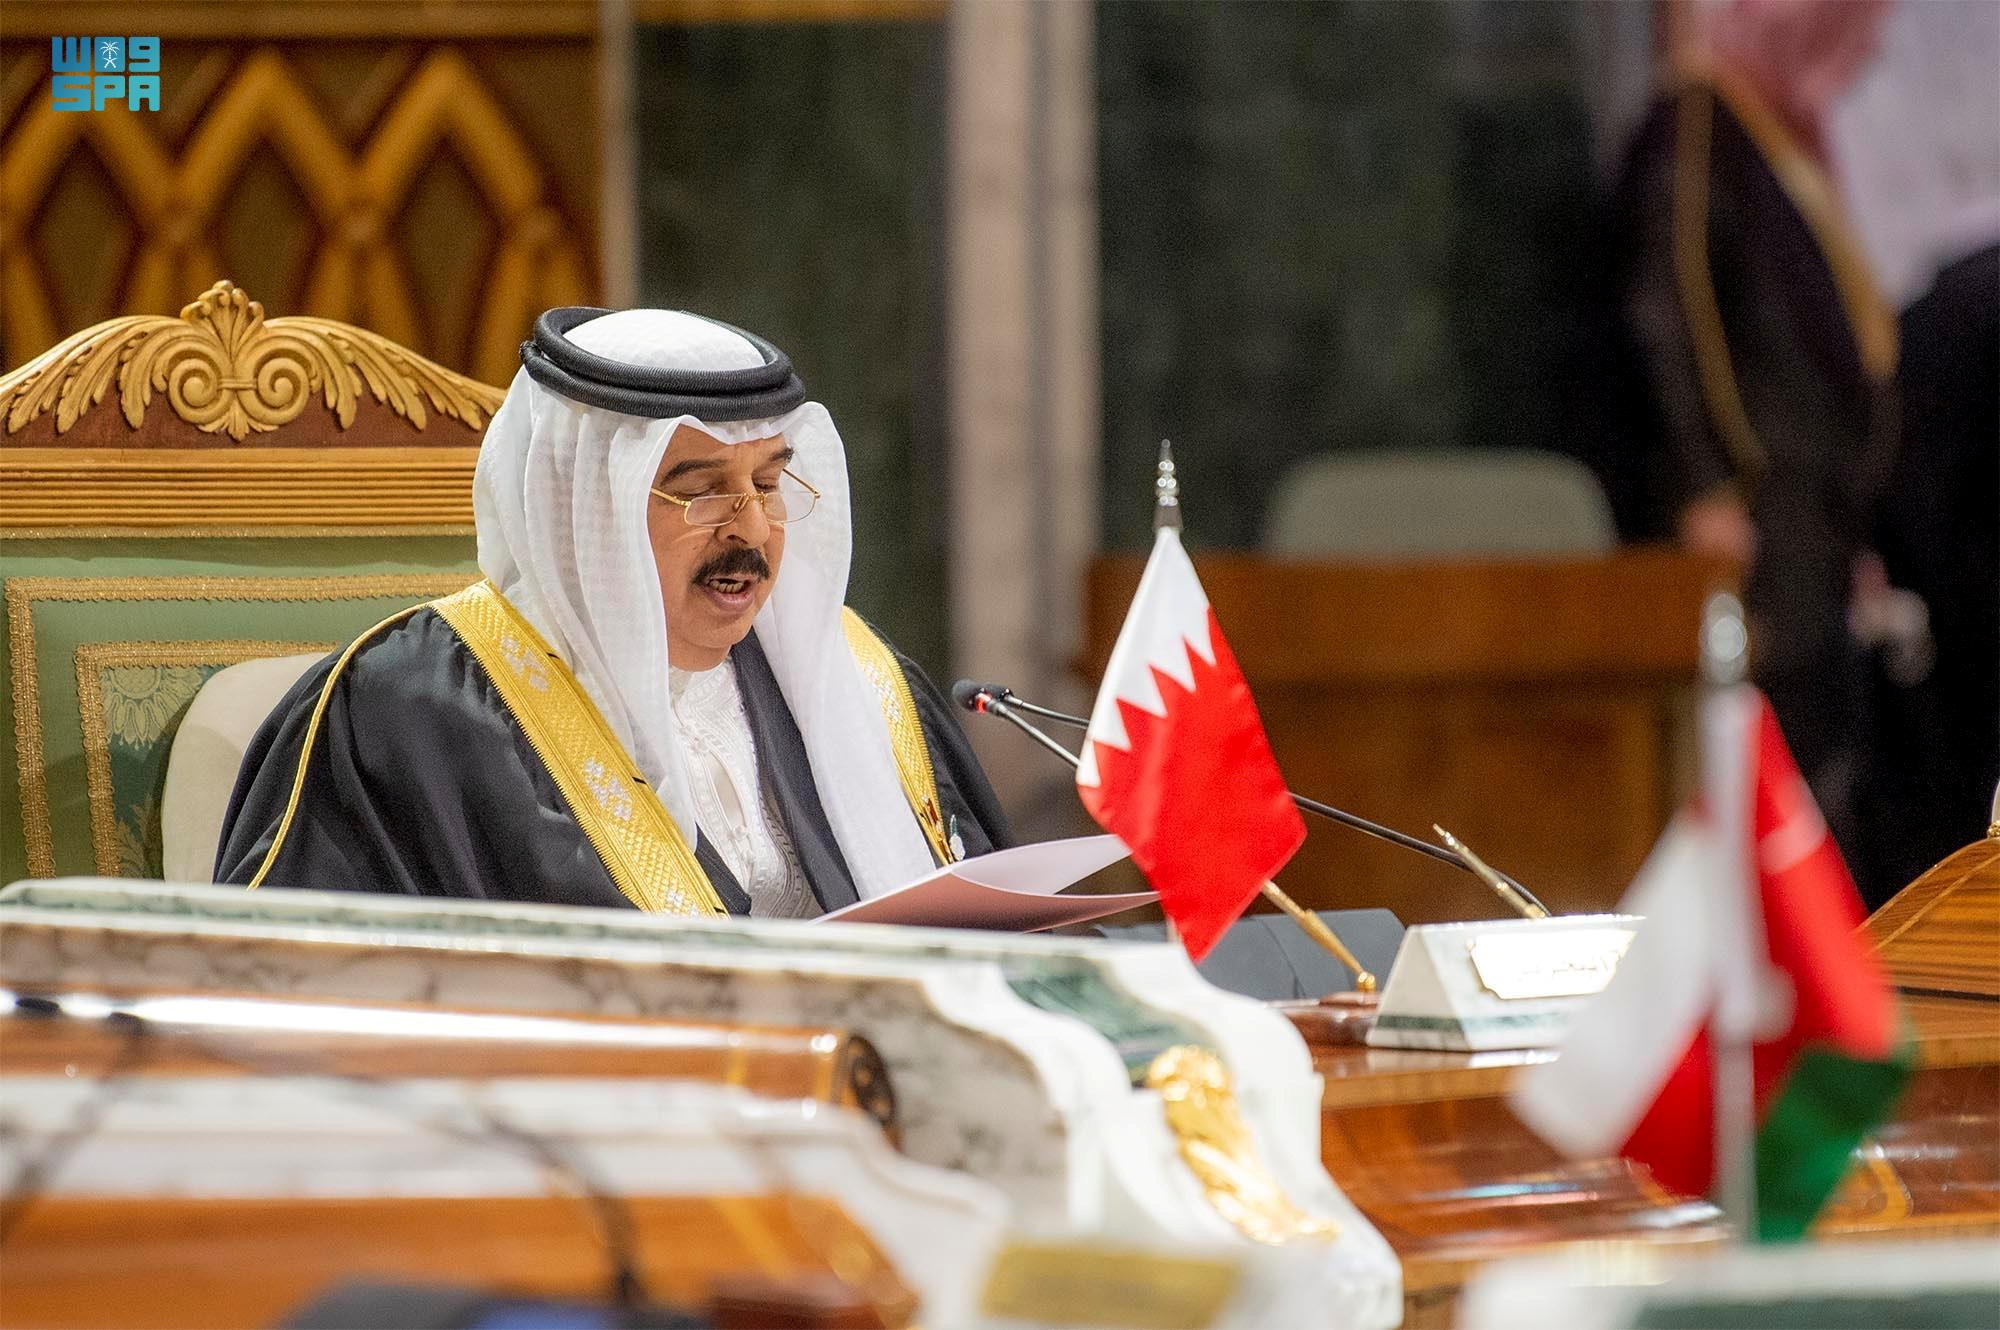 Bahrain's King Hamad bin Isa al-Khalifa speaks during the Gulf Summit in Riyadh, Saudi Arabia